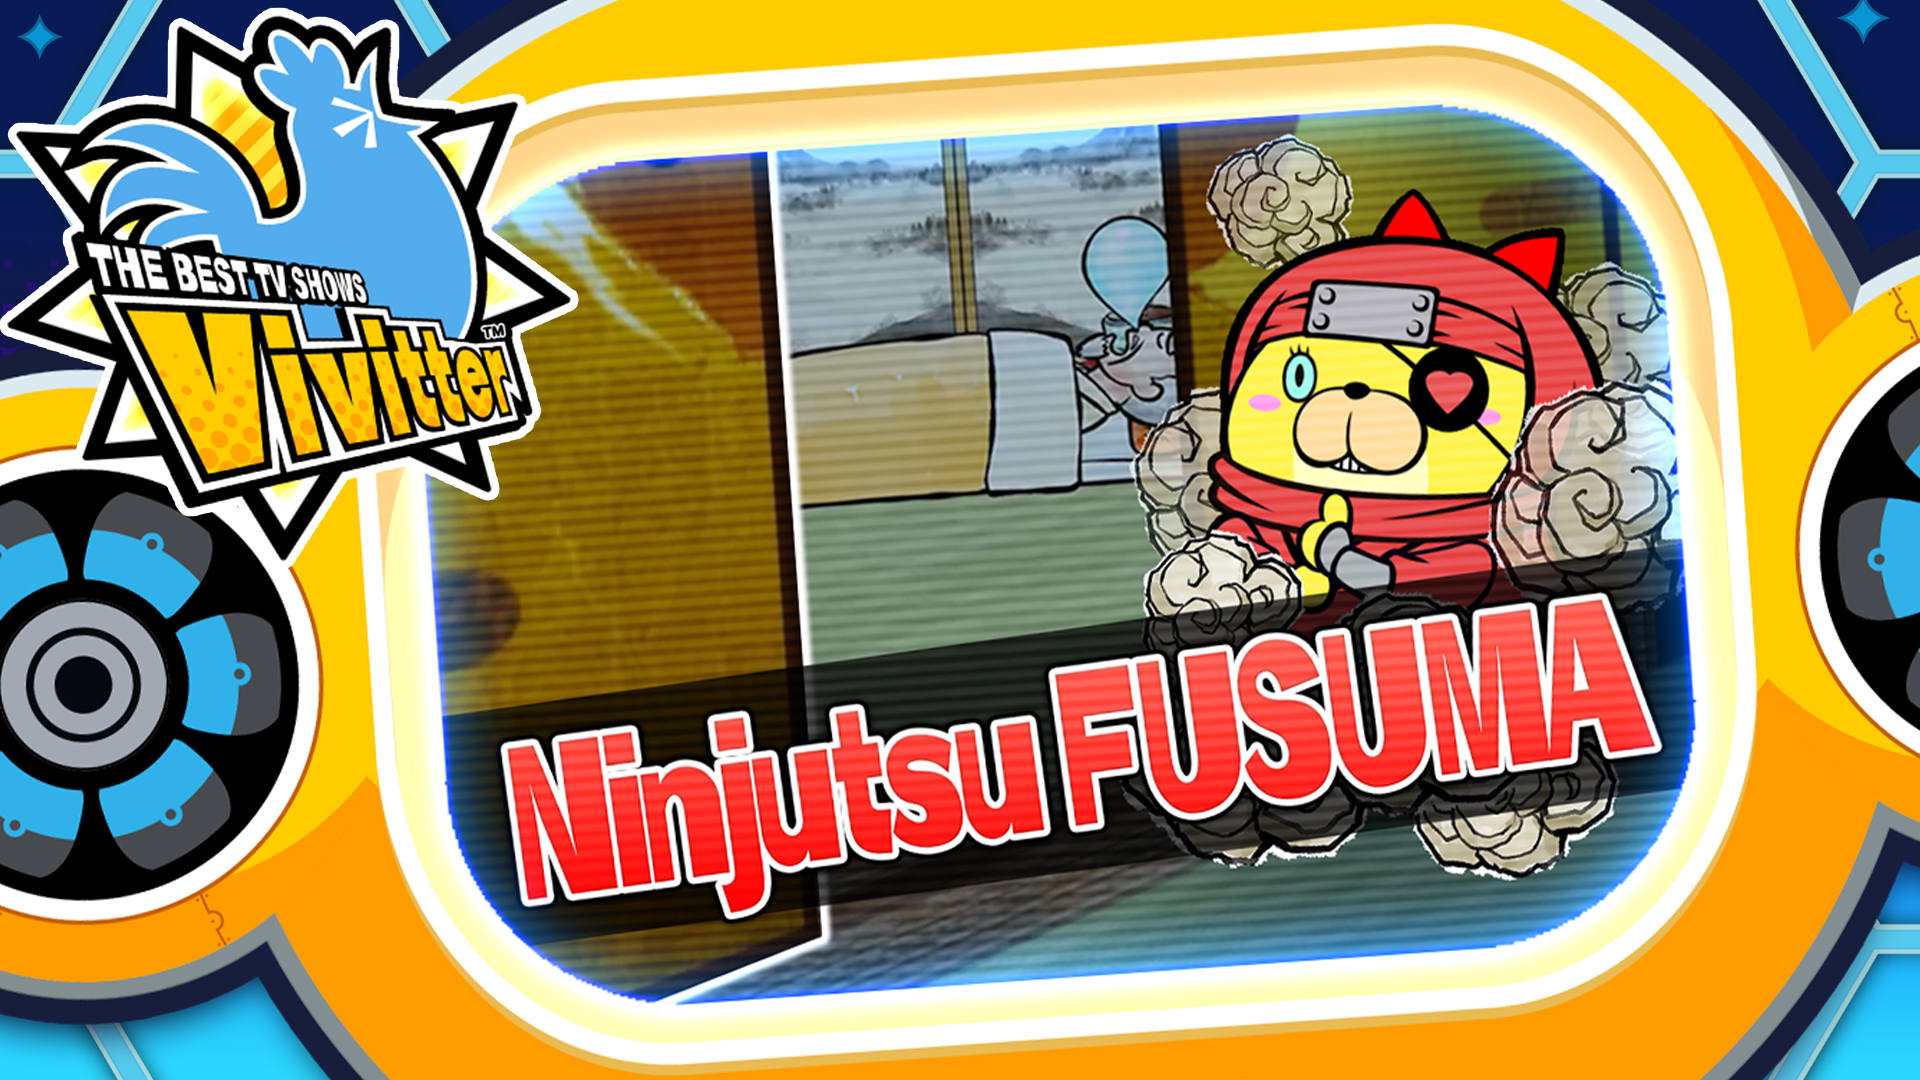 Additional mini-game "Ninjutsu FUSUMA"